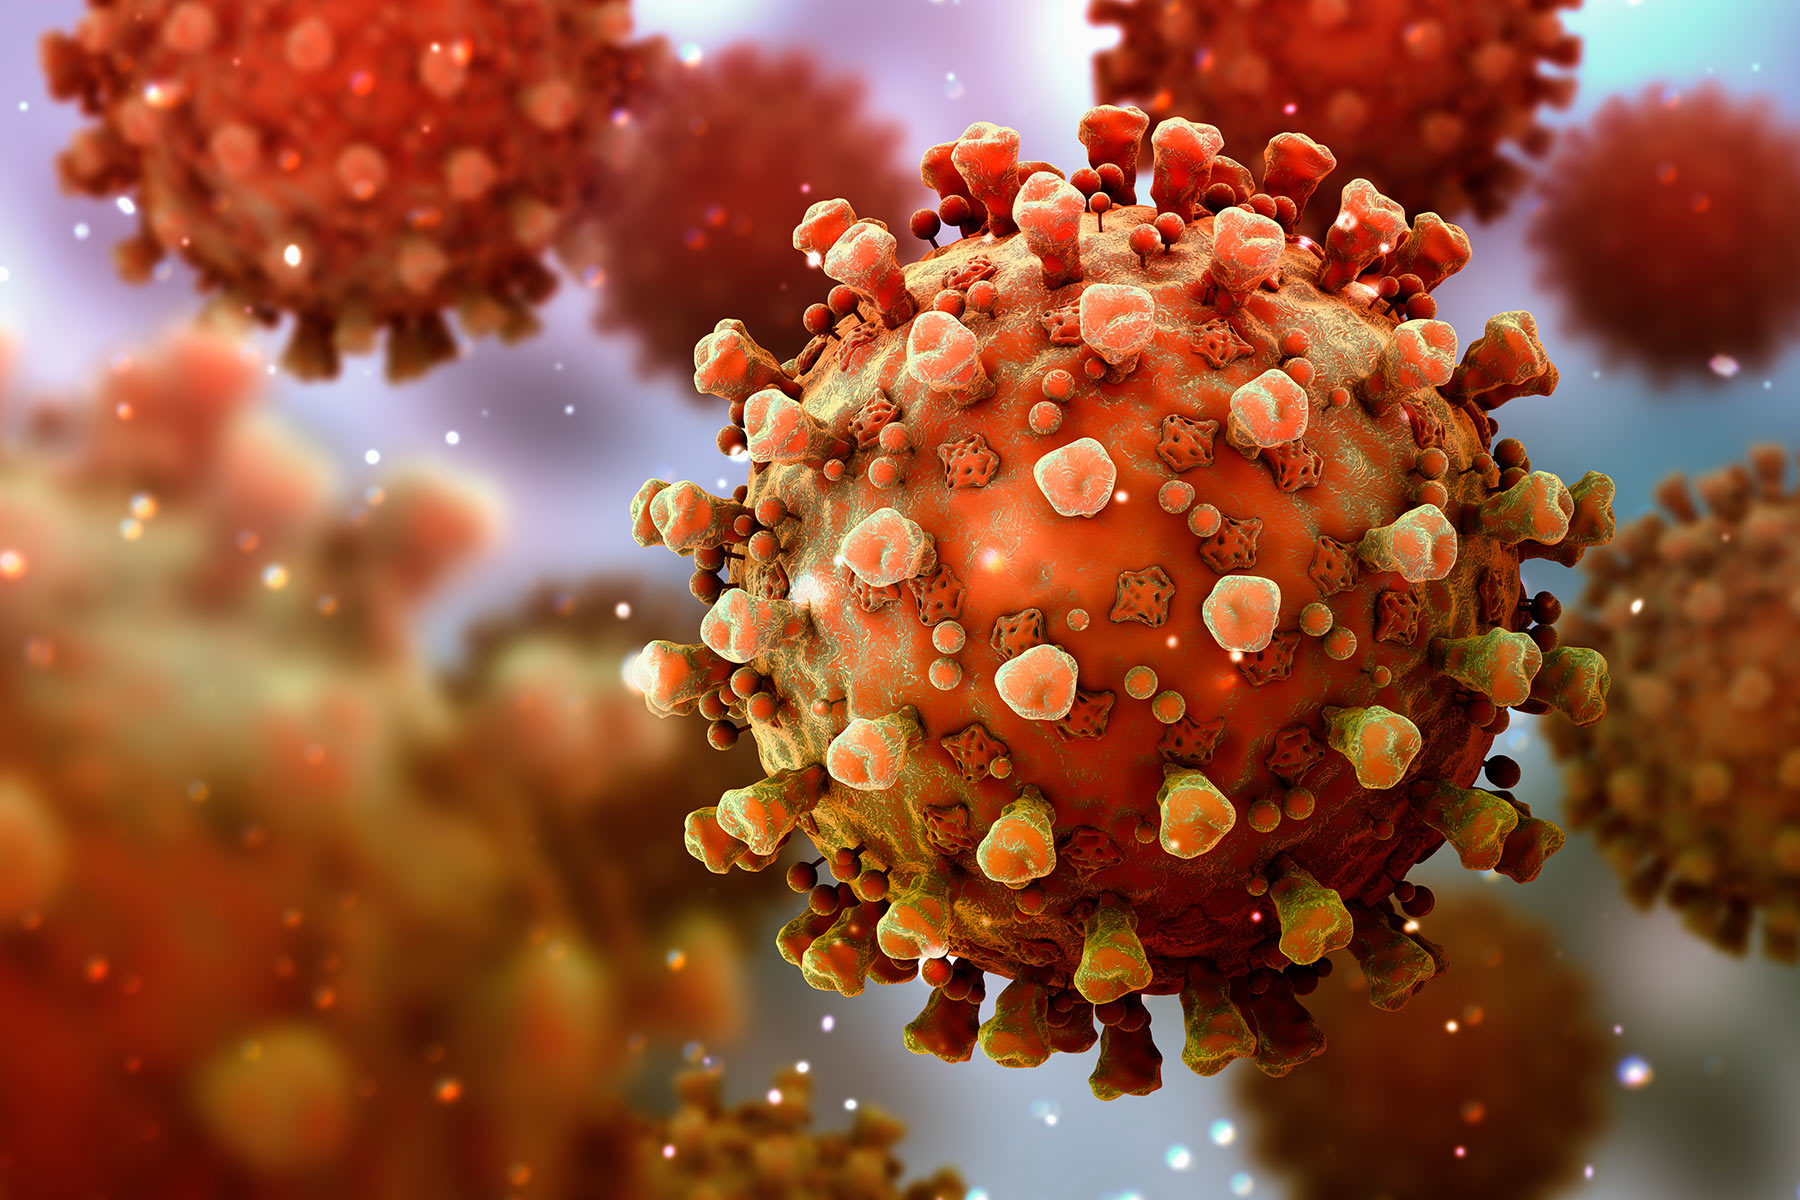 Study: New Mutation Sped Up Spread of Coronavirus